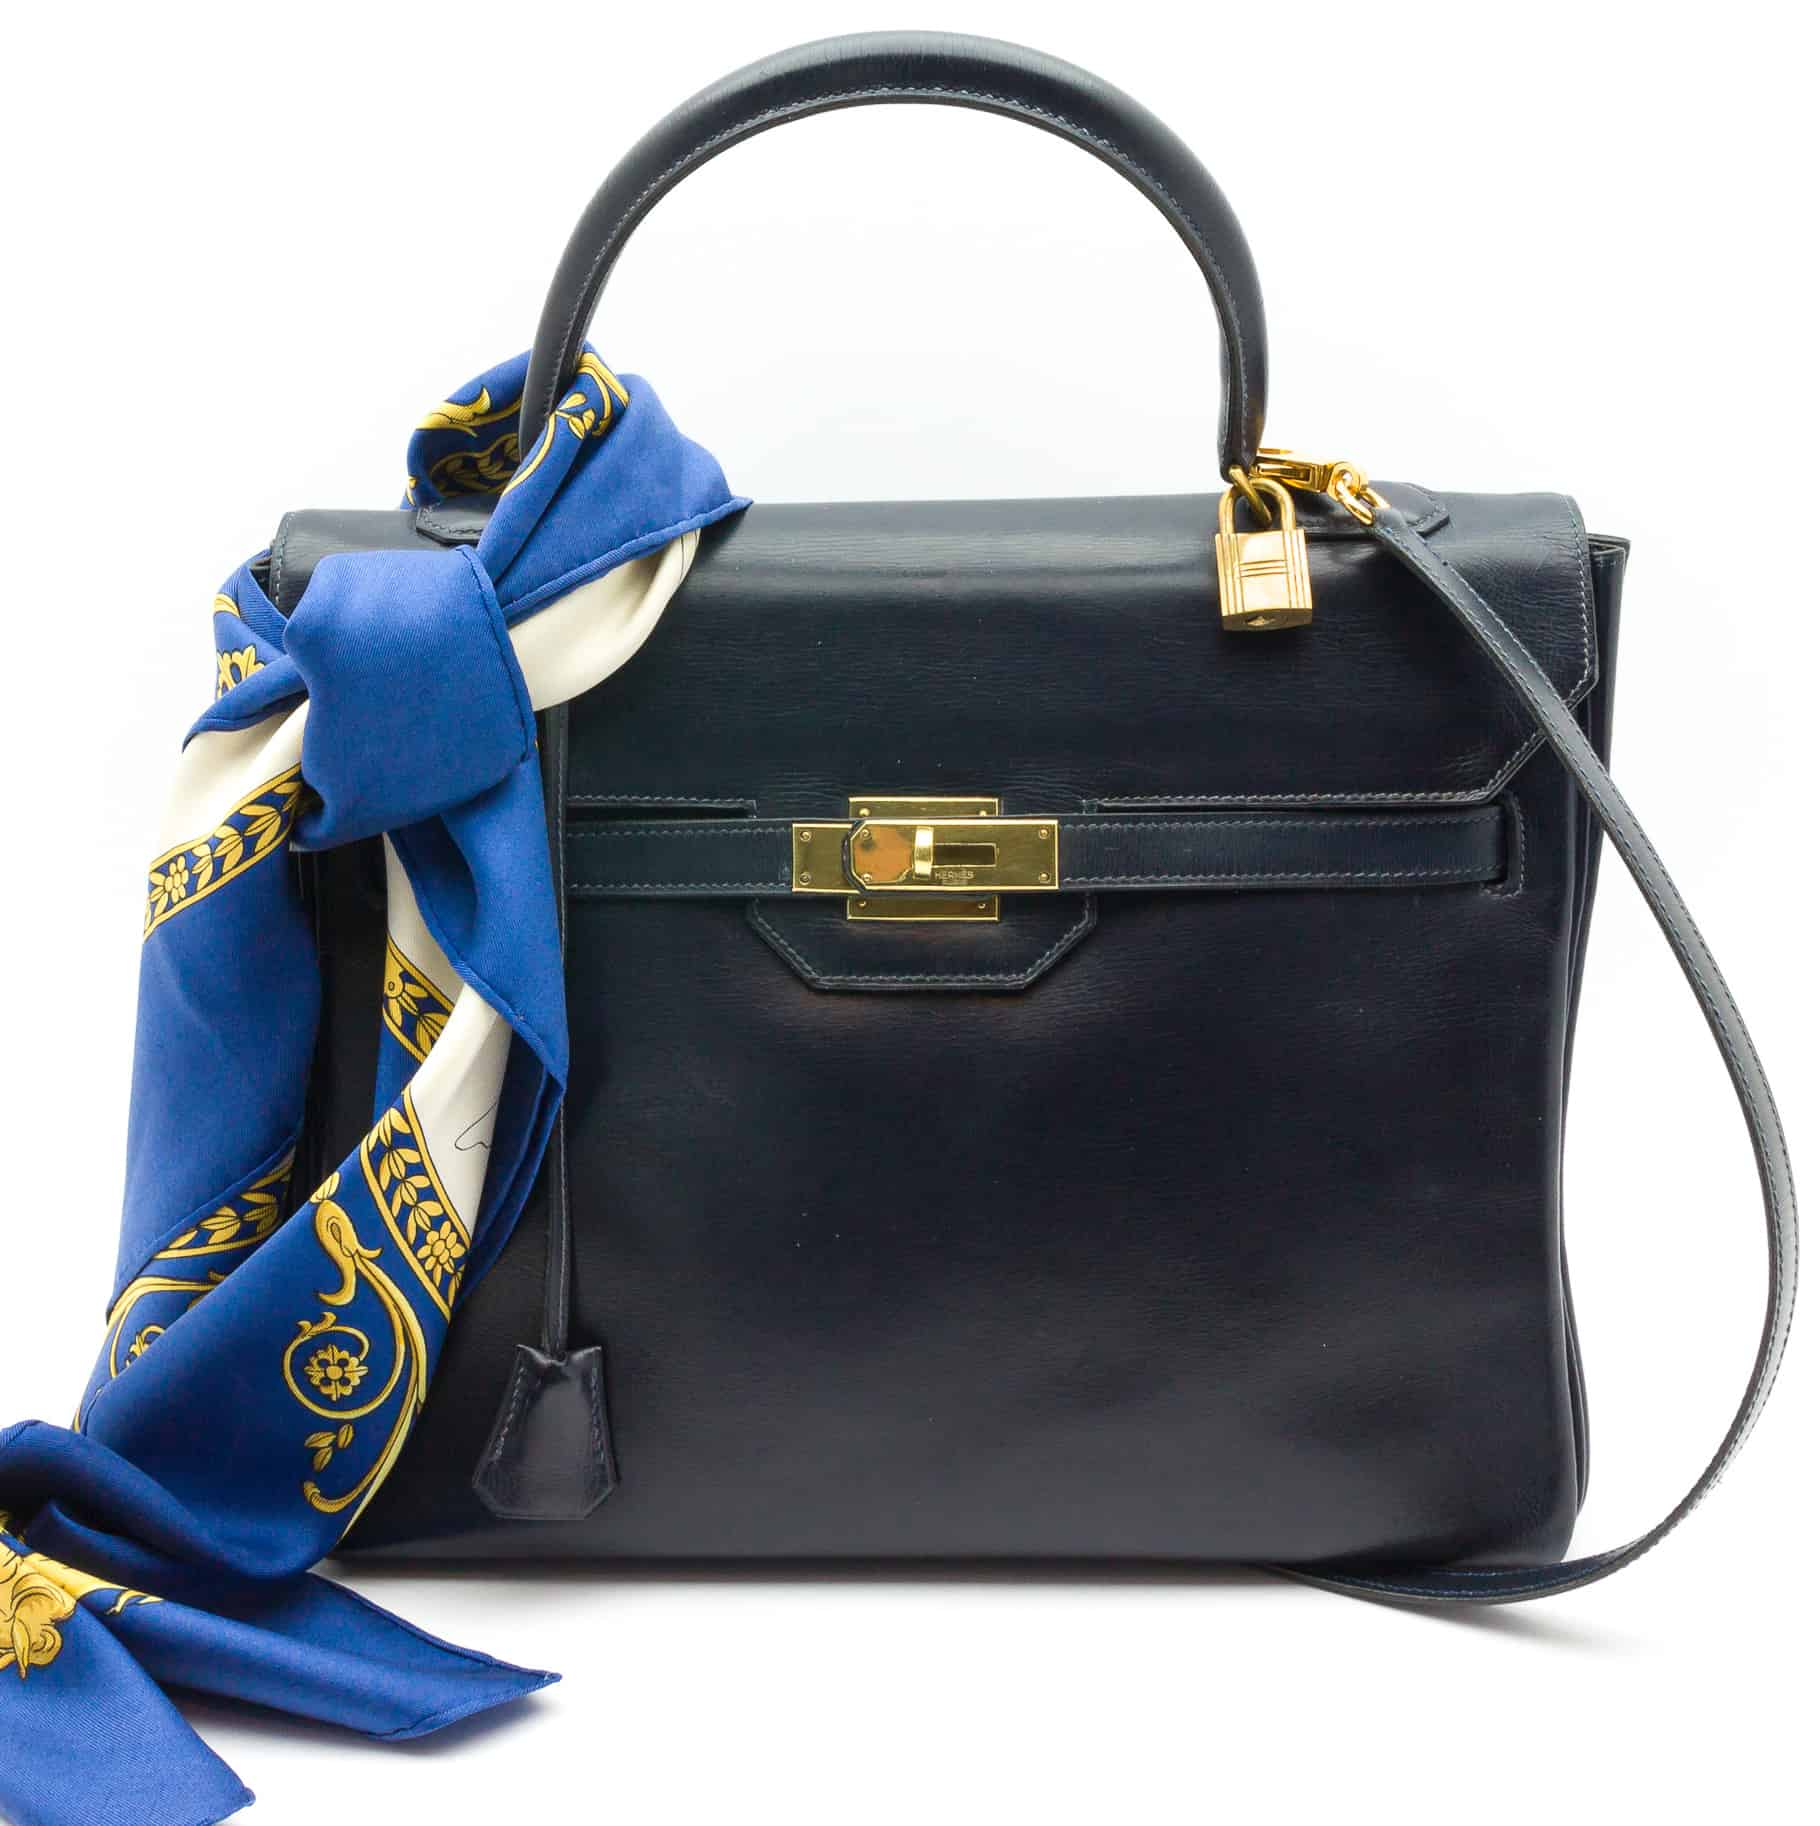 Past auction: Navy blue 29cm Hermes Kelly bag 1960s